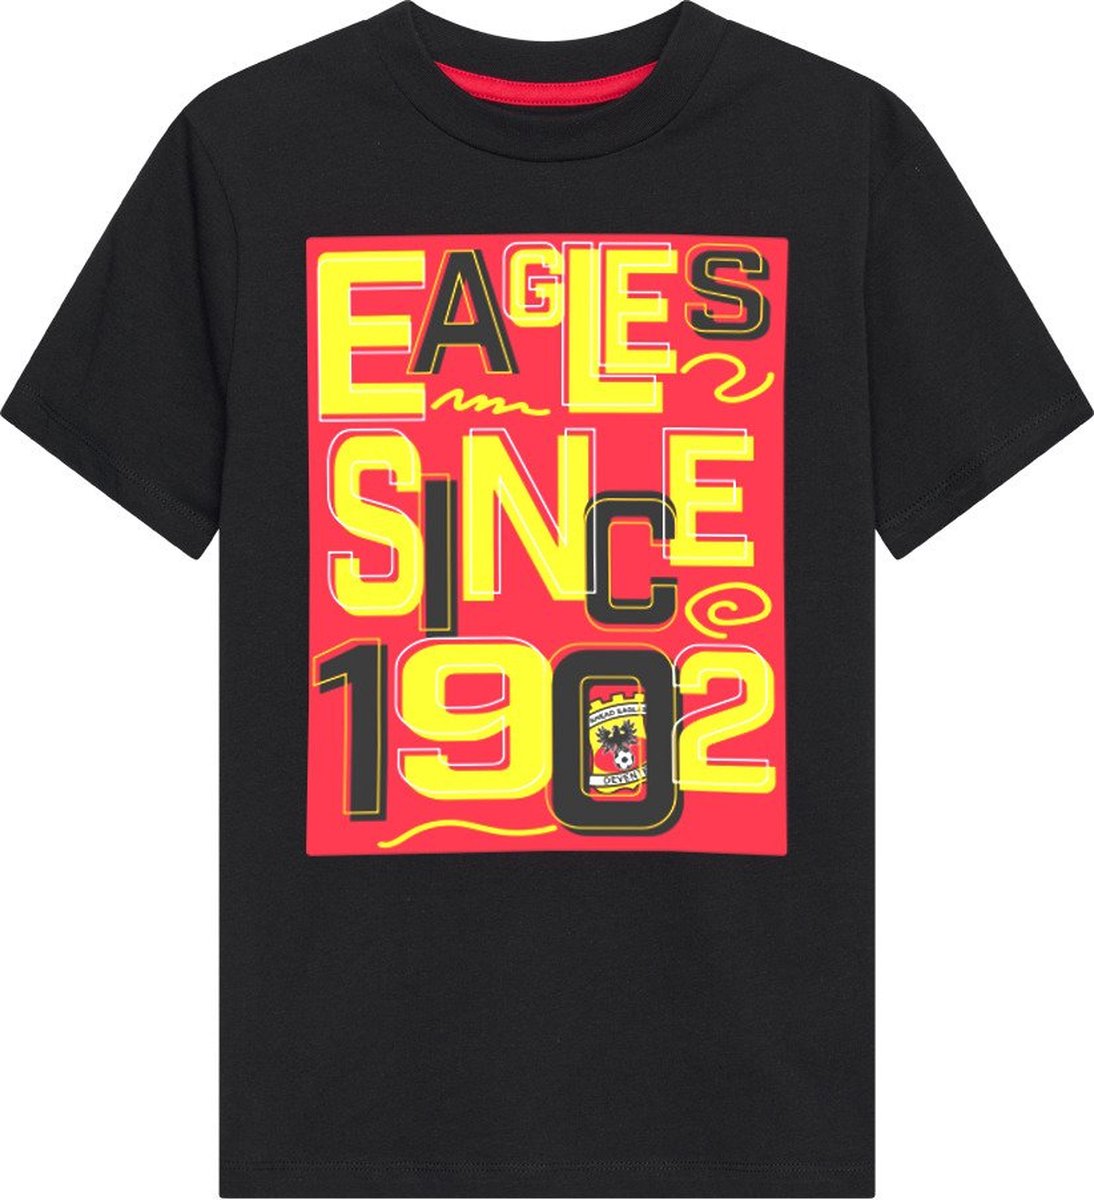 Eagles kids T-shirt - Voetbalshirts kinderen - Go Ahead Eagles - maat 140